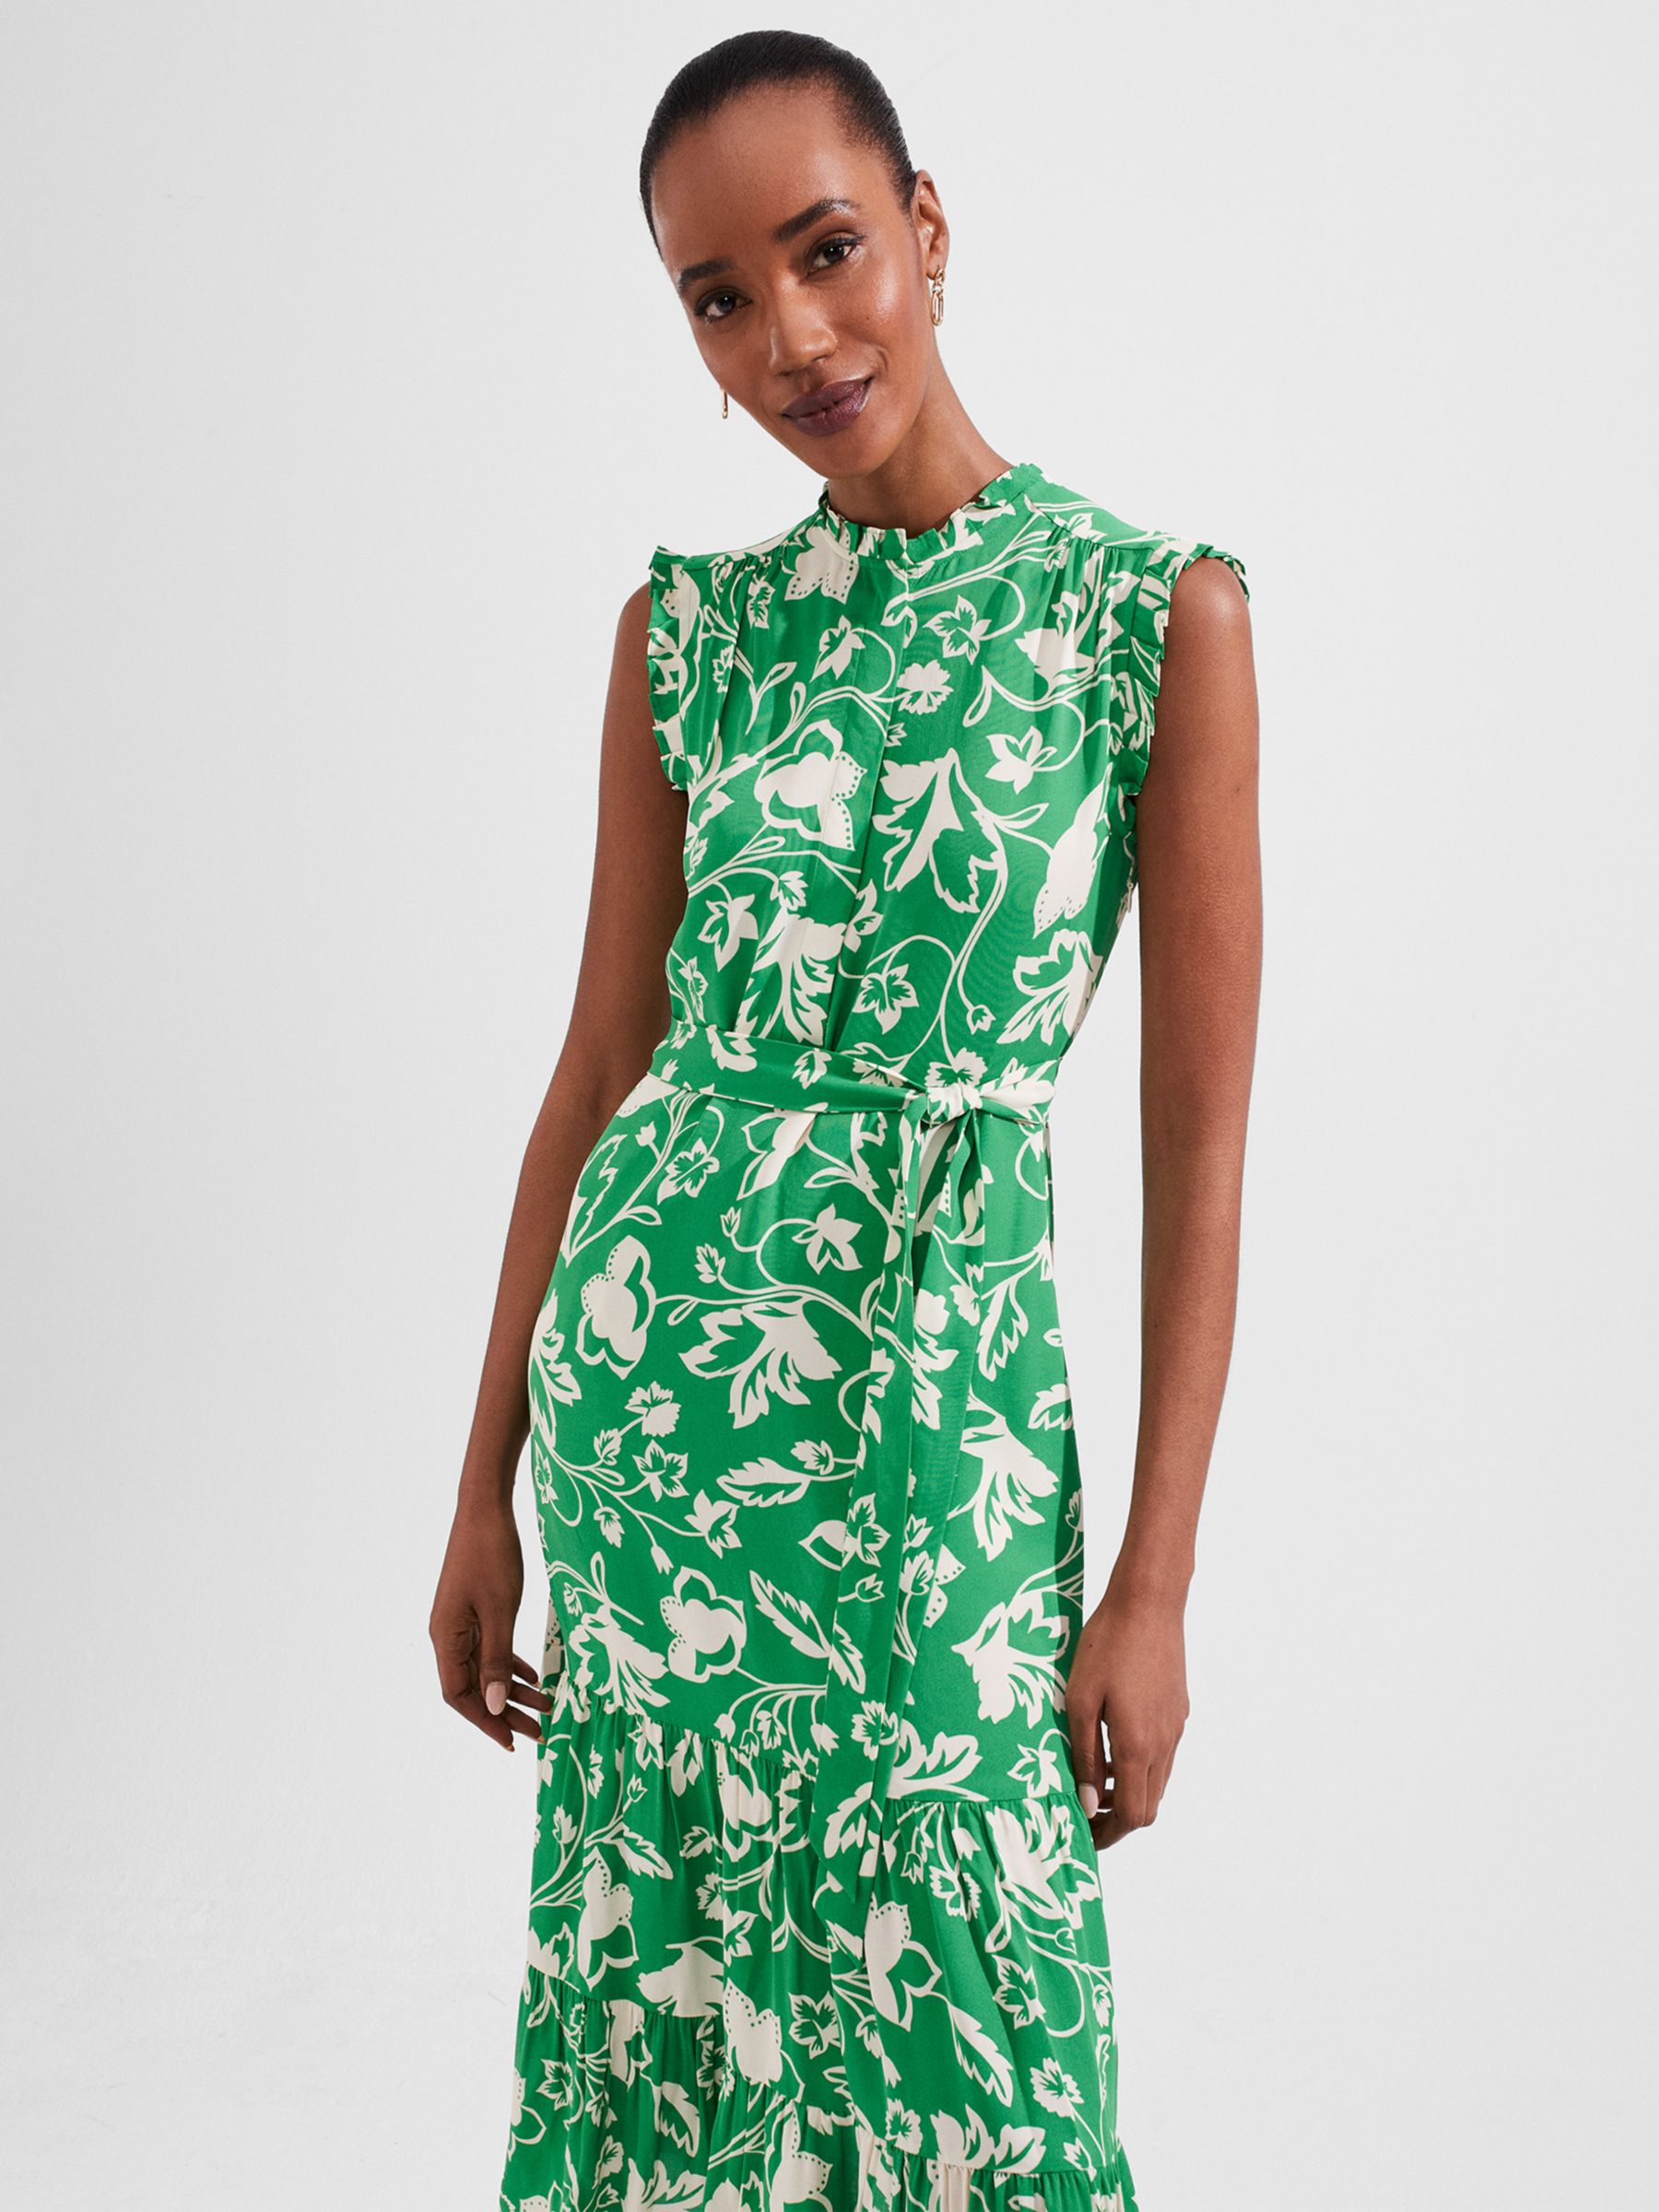 Hobbs Elsa Petite Floral Print Dress, Green/Buttercream, 10